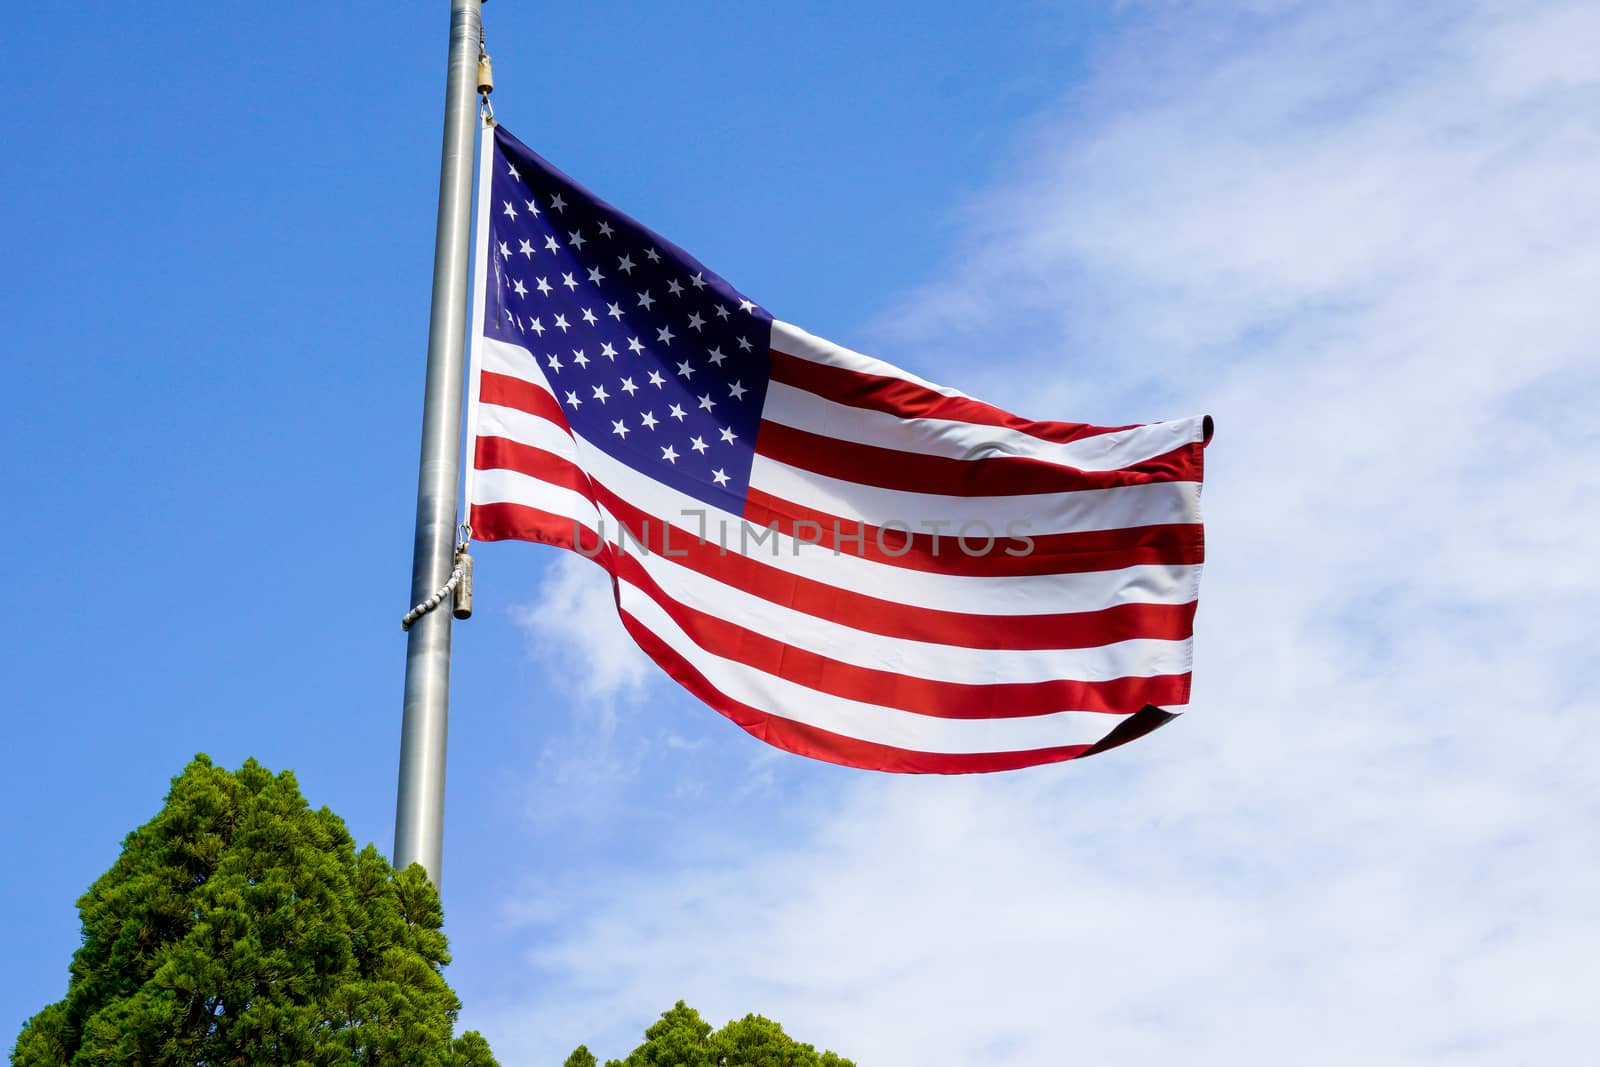 USA flag on the blue sky